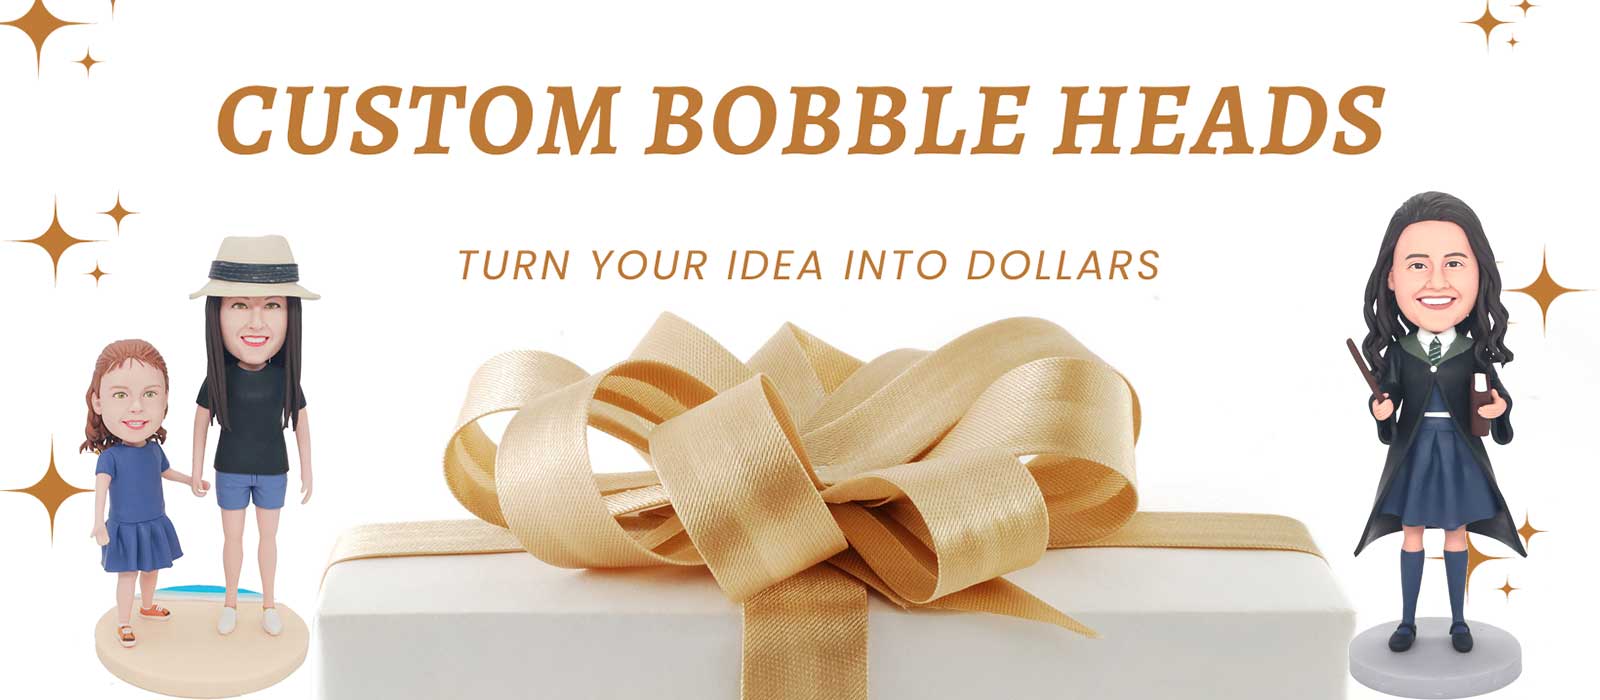 Custom Bobble Head - Turn Your Idea Into Dollars